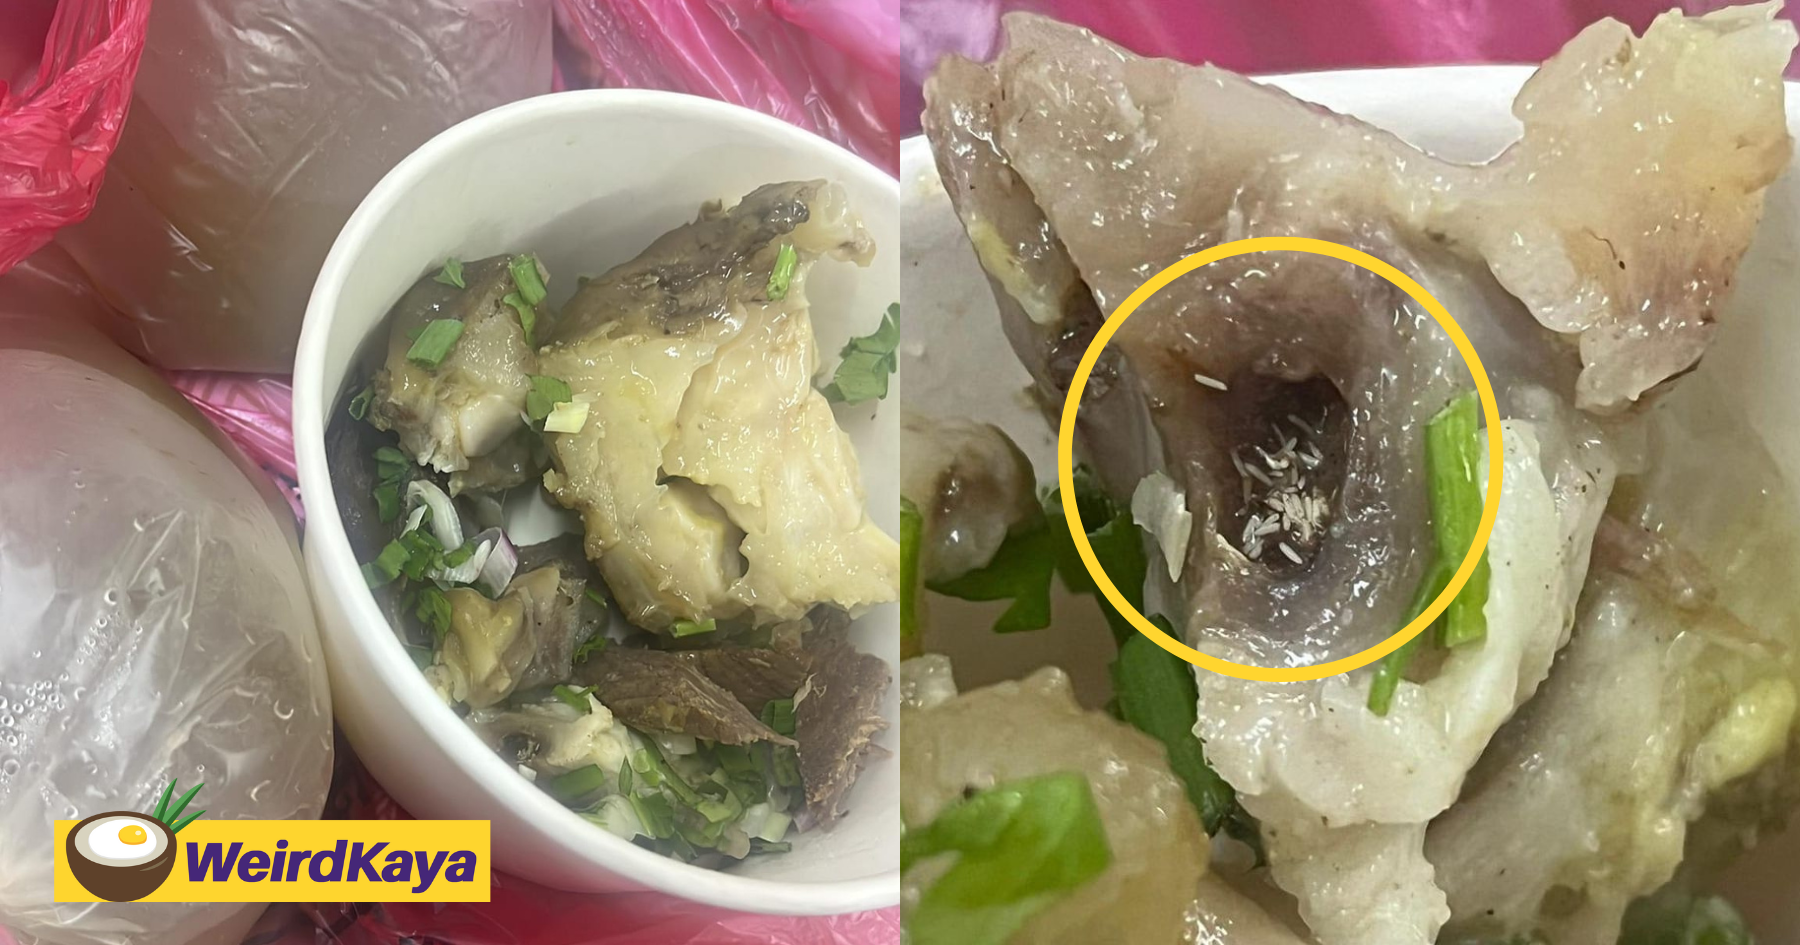 M'sian Horrified To See Maggots Inside Soup He Bought From Ramadan Bazaar At Melaka